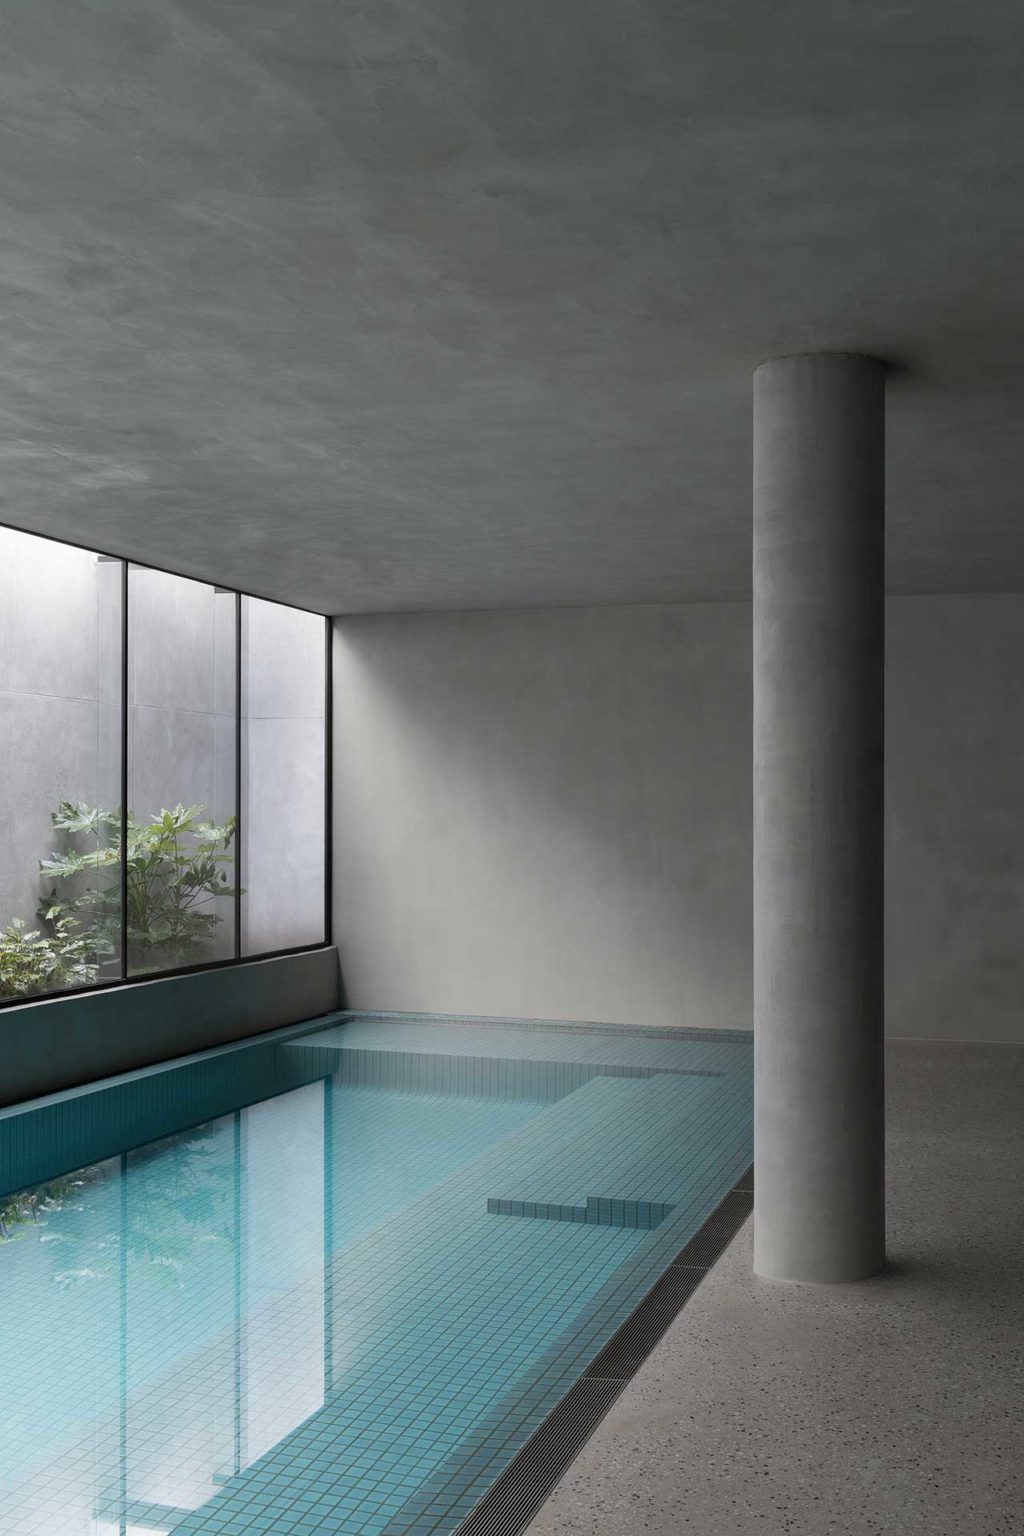 An indoor pool in a modern basement